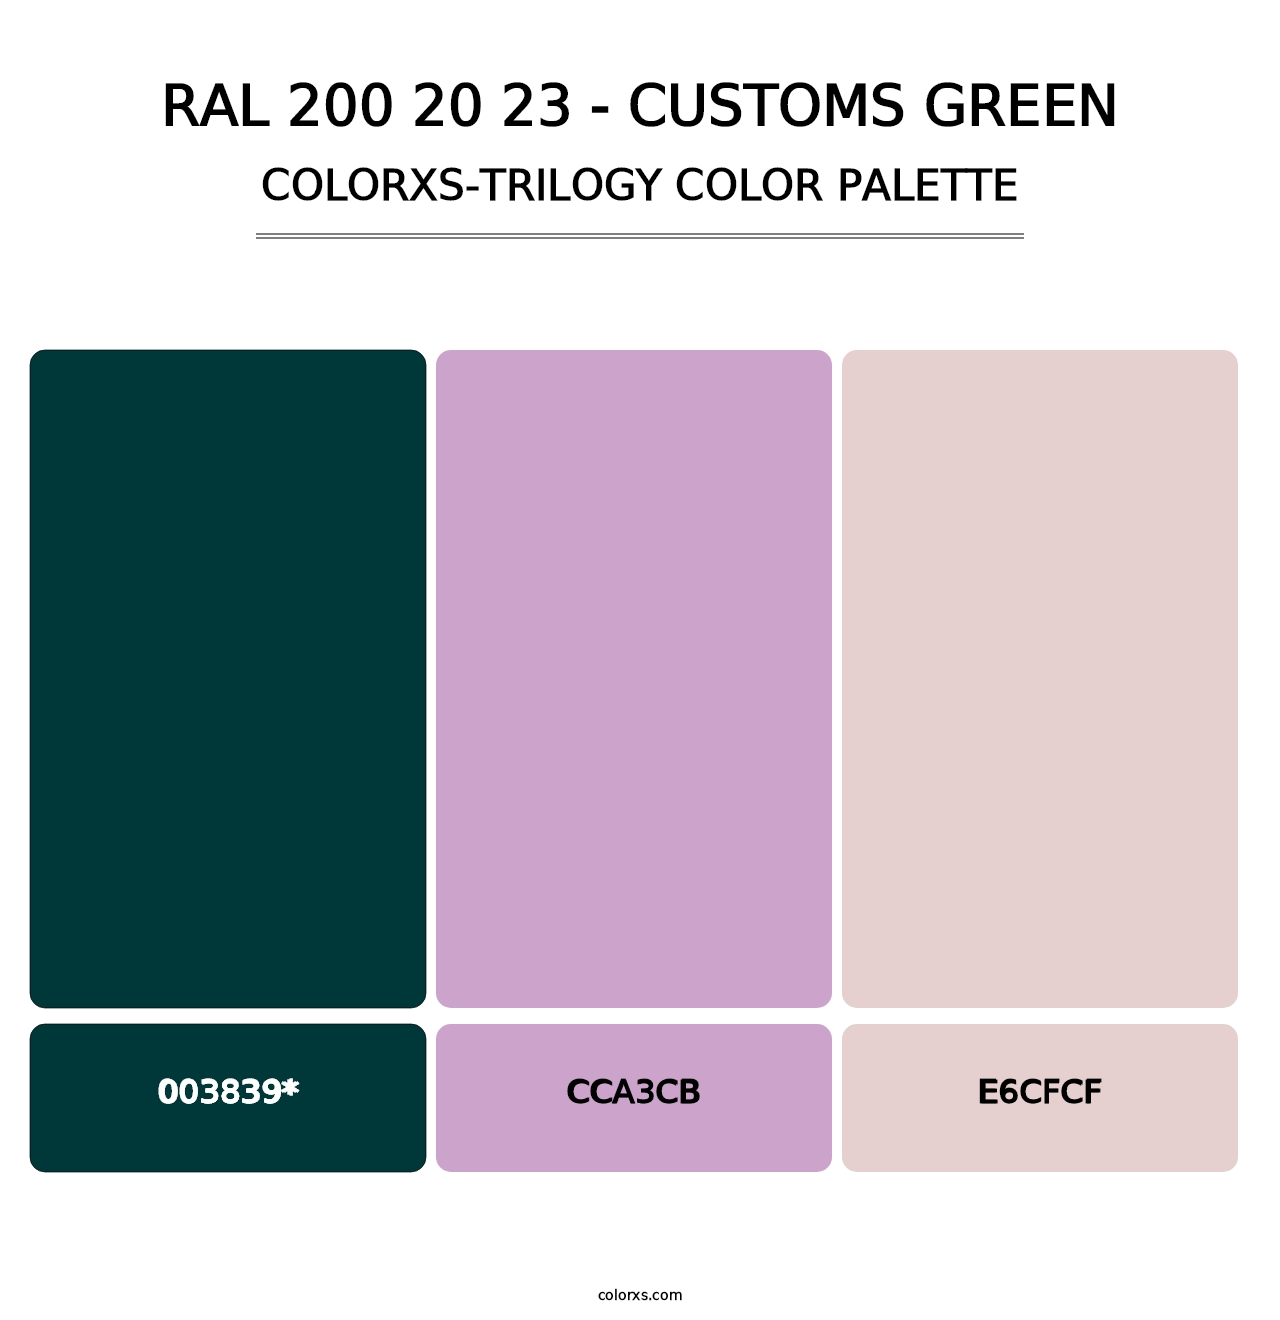 RAL 200 20 23 - Customs Green - Colorxs Trilogy Palette